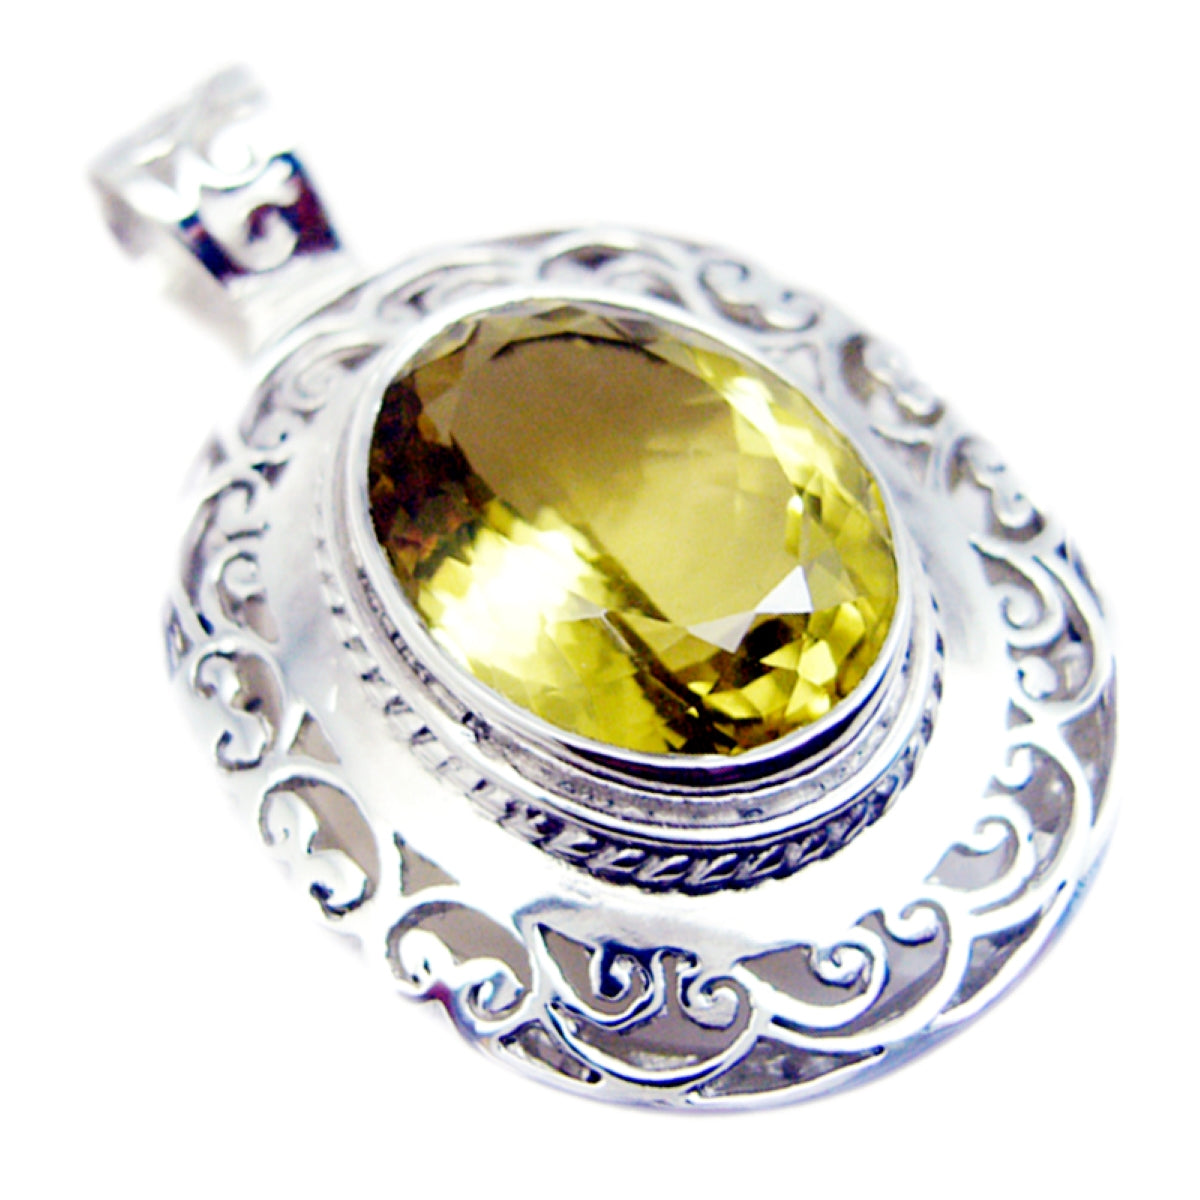 Riyo Nice Gemstone Oval Faceted Yellow Lemon Quartz 925 Sterling Silver Pendant b' day gift